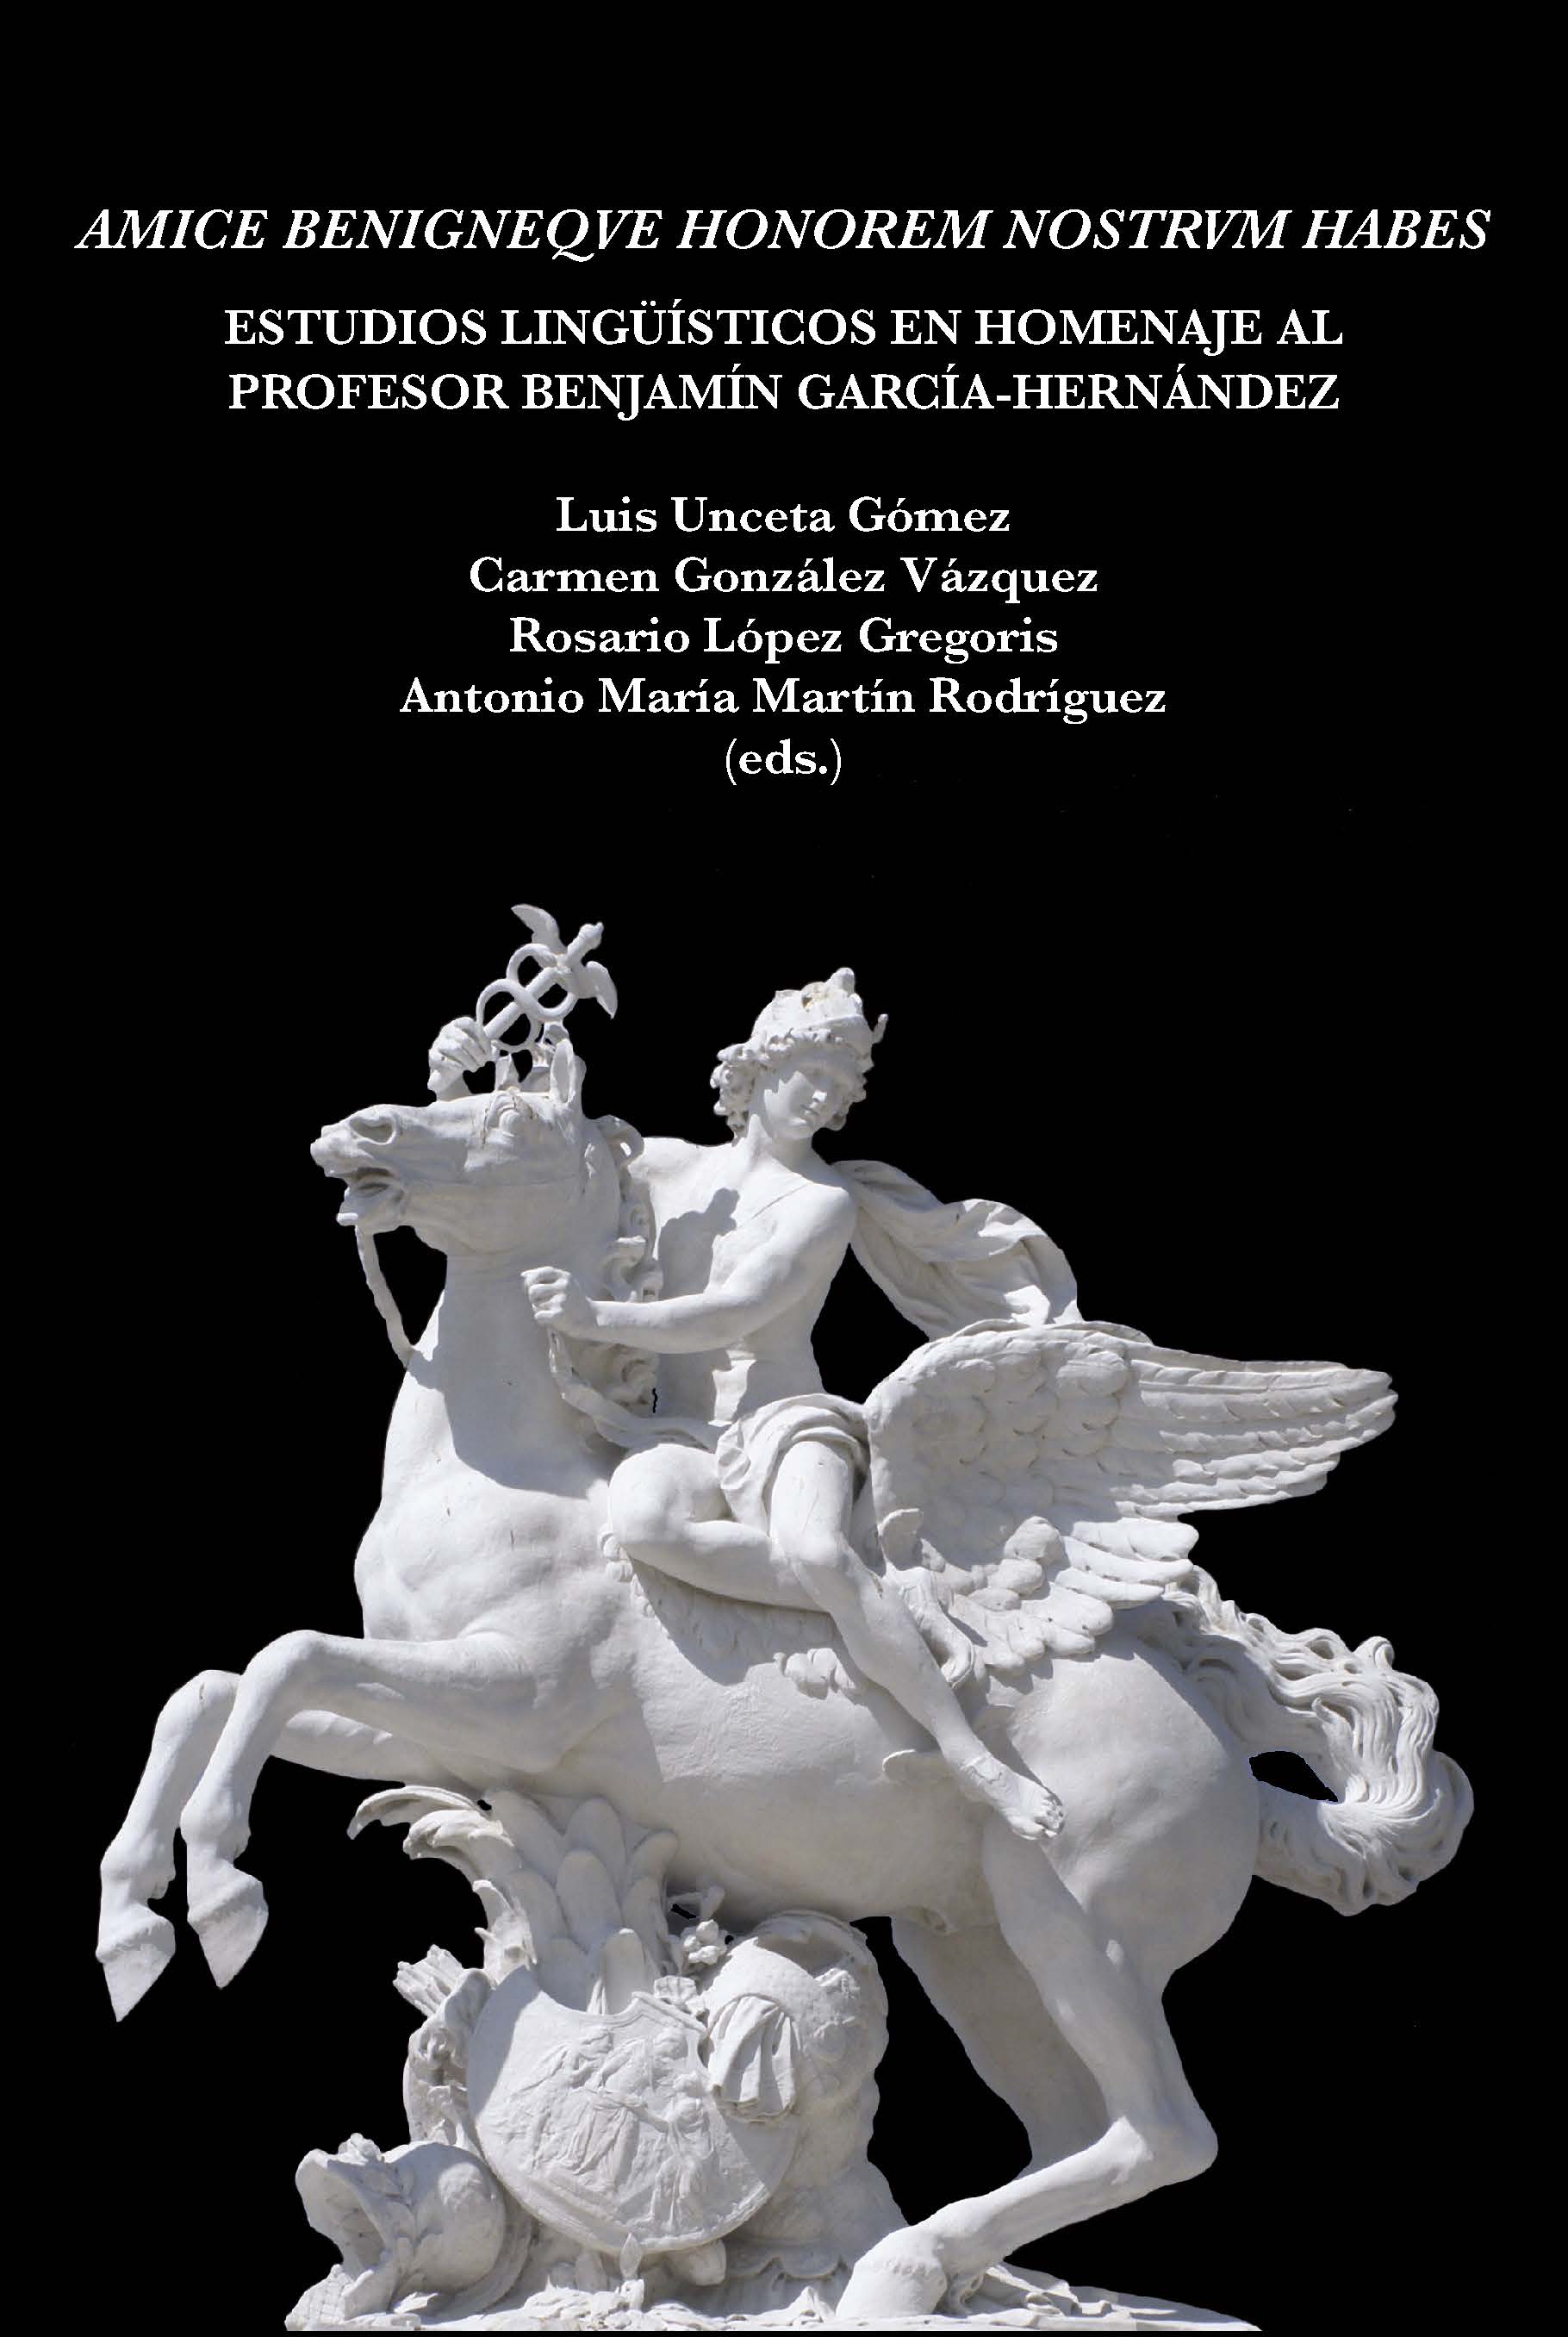 Imagen de portada del libro "Amice benigneque honorem nostrum habes":